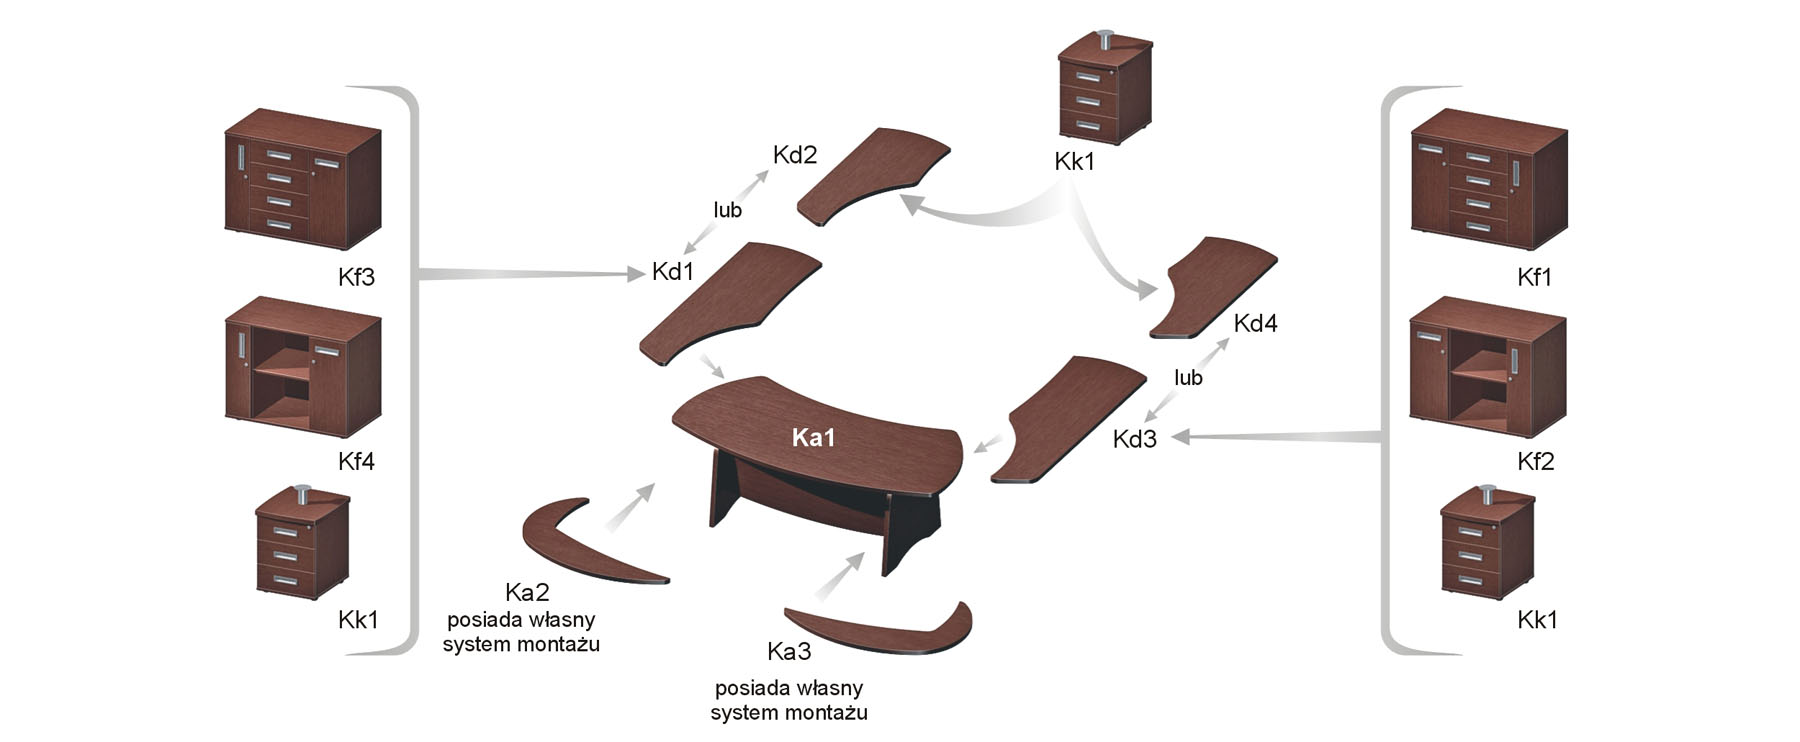 biurko gabinetowe Ka1 - konfiguracja